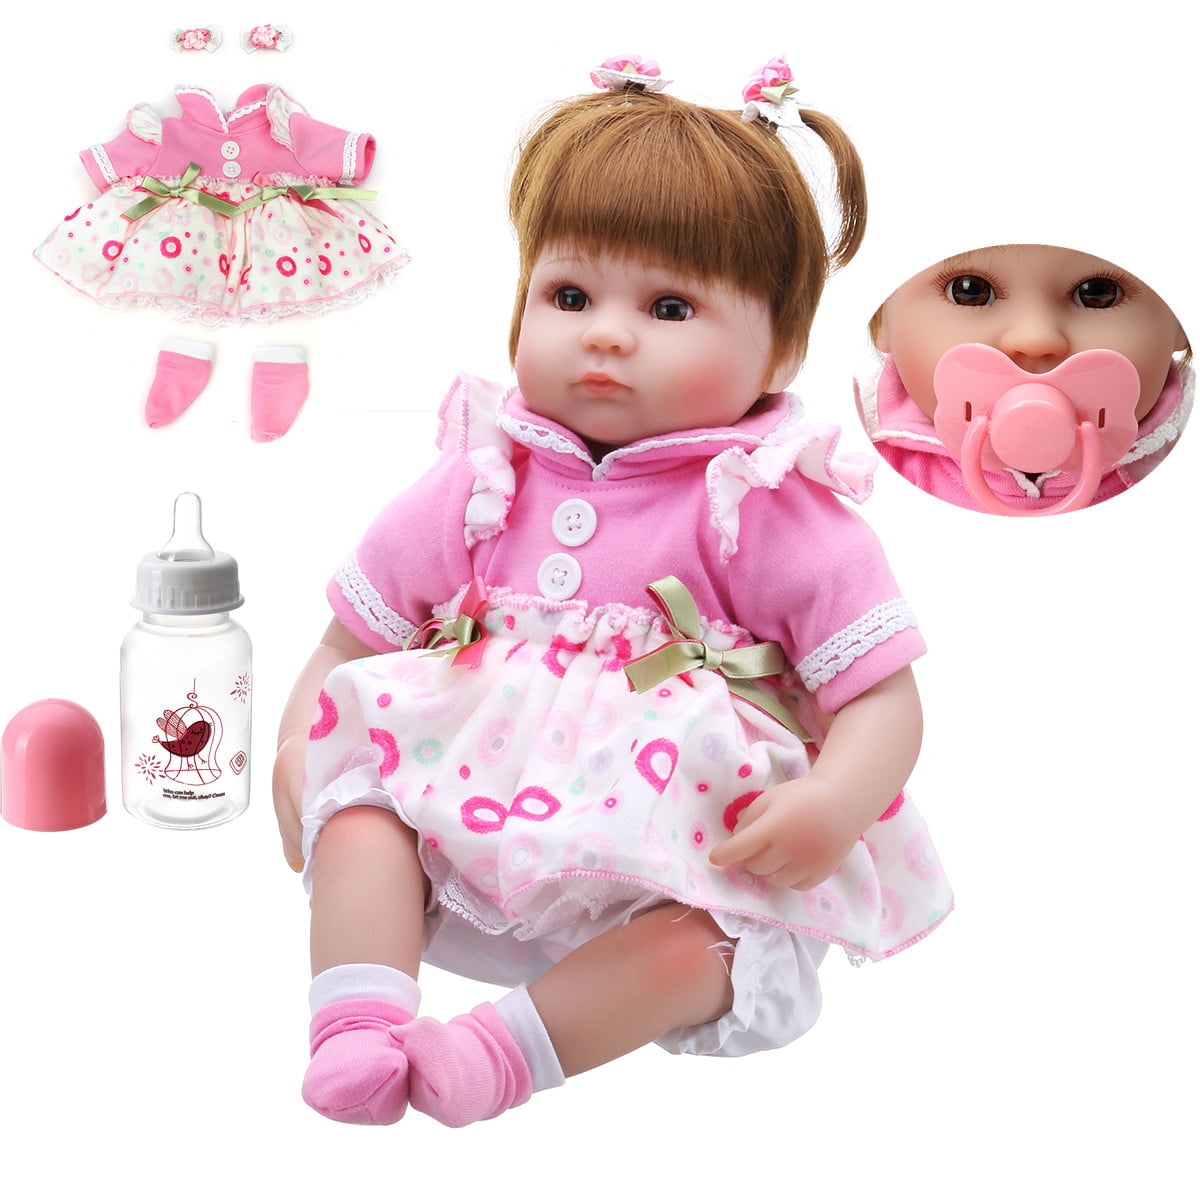 Realistic Reborn Baby Dolls Newborn Babies Vinyl Silicone Girl Doll Handmade 11/"